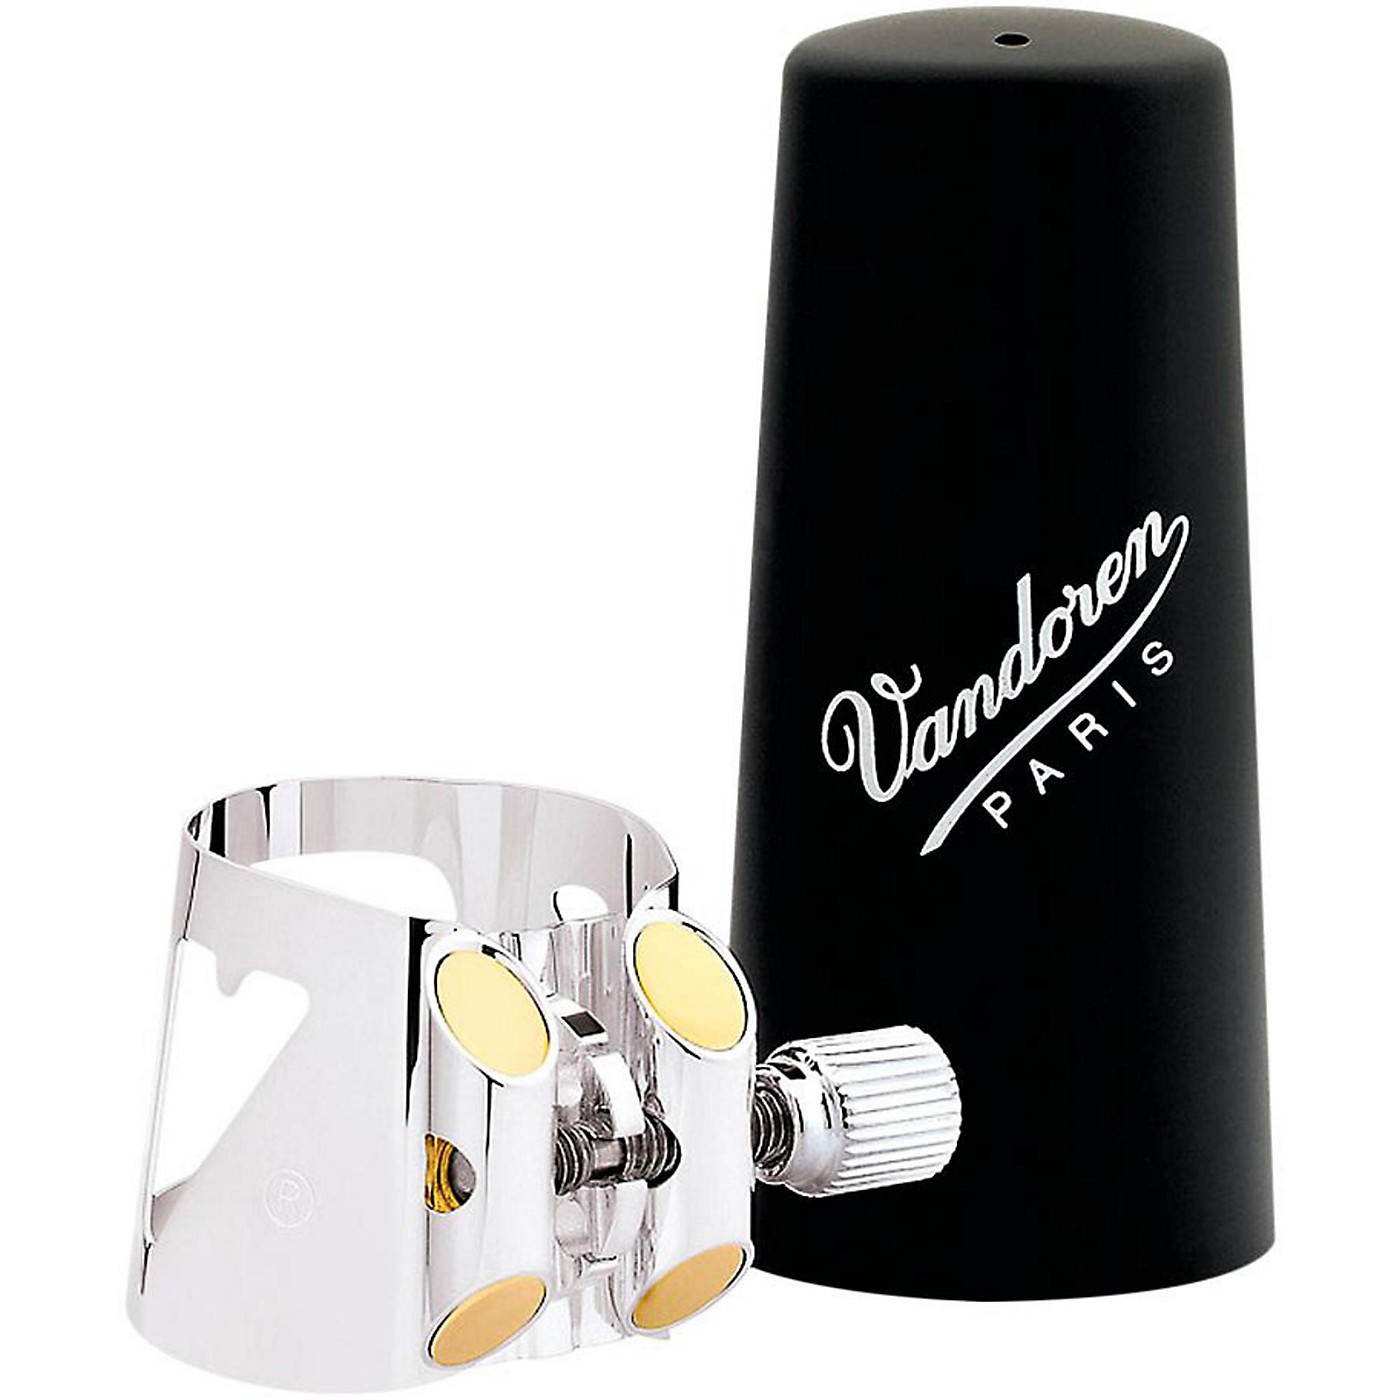 Vandoren Optimum Bass Clarinet Silver-plated Ligature & Plastic Cap thumbnail